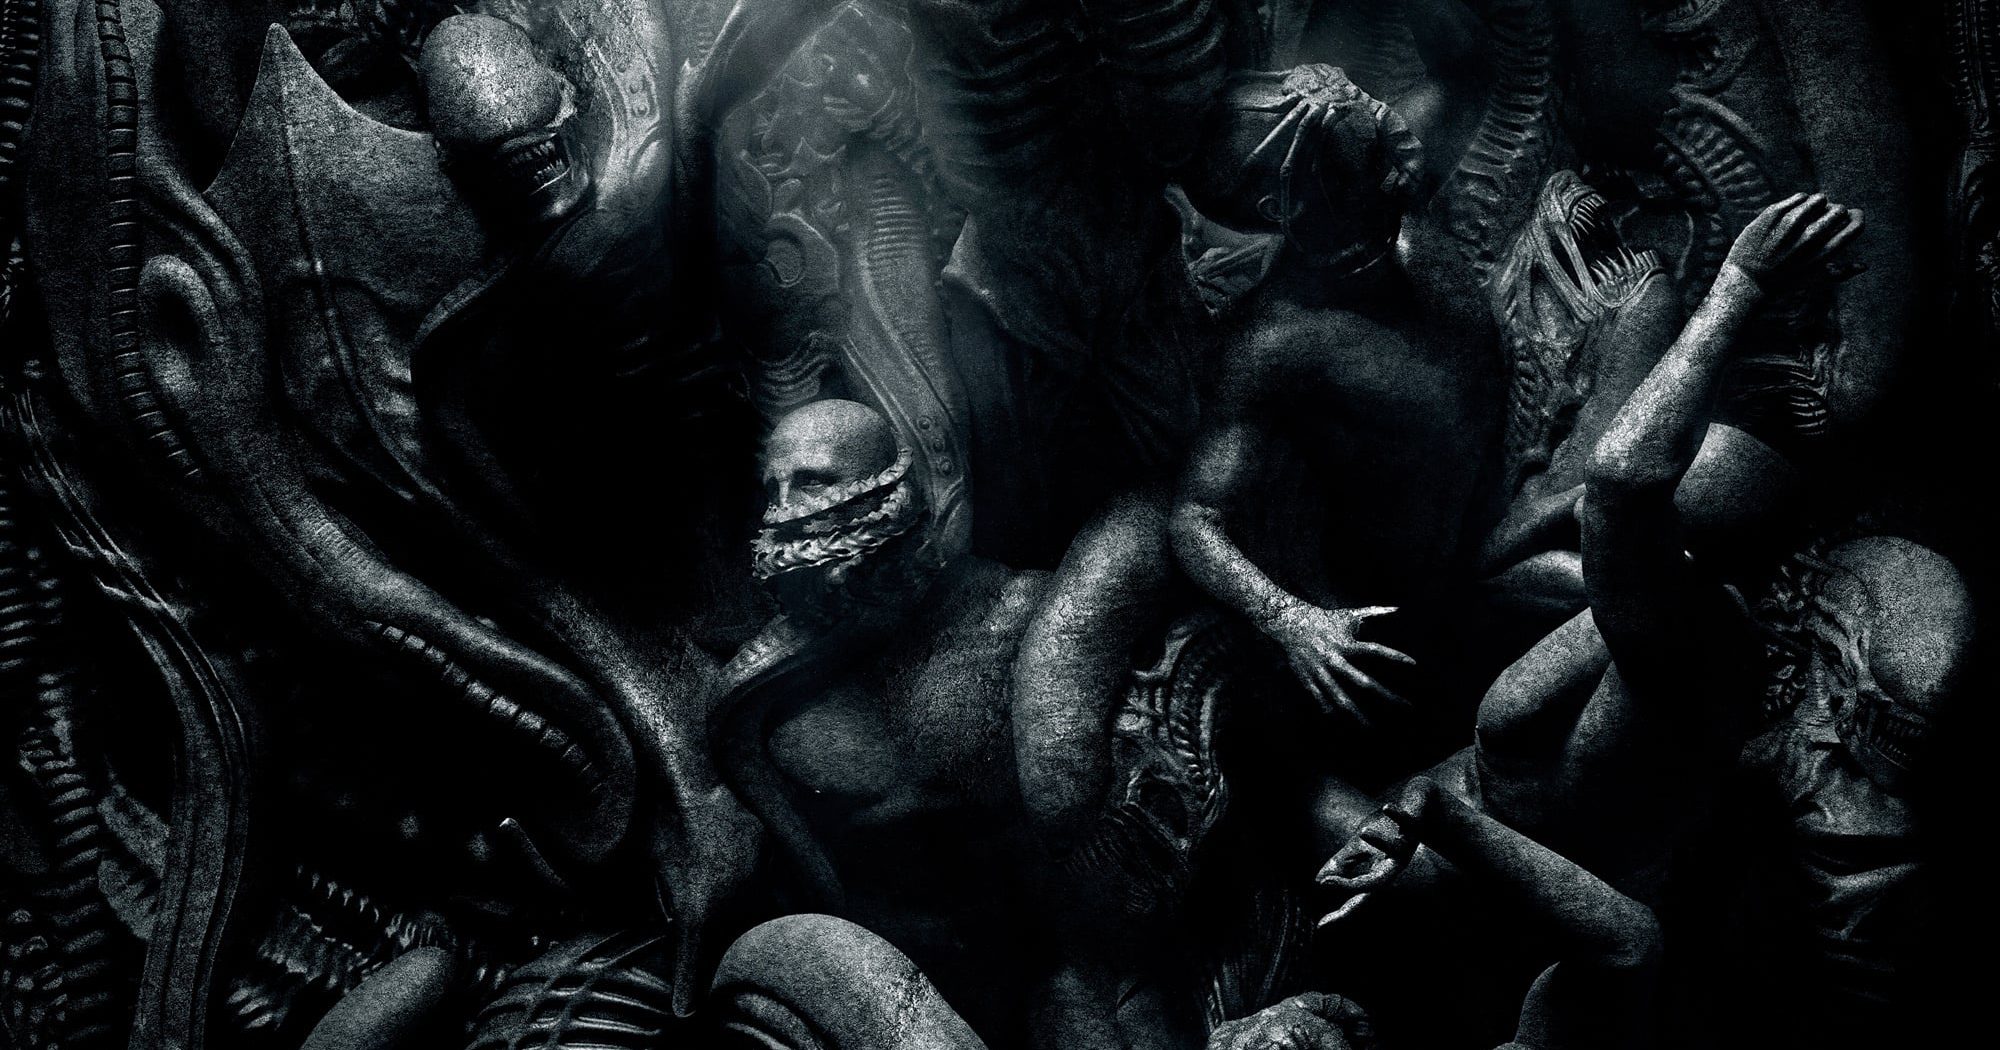 Poster for the movie "Alien: Covenant"